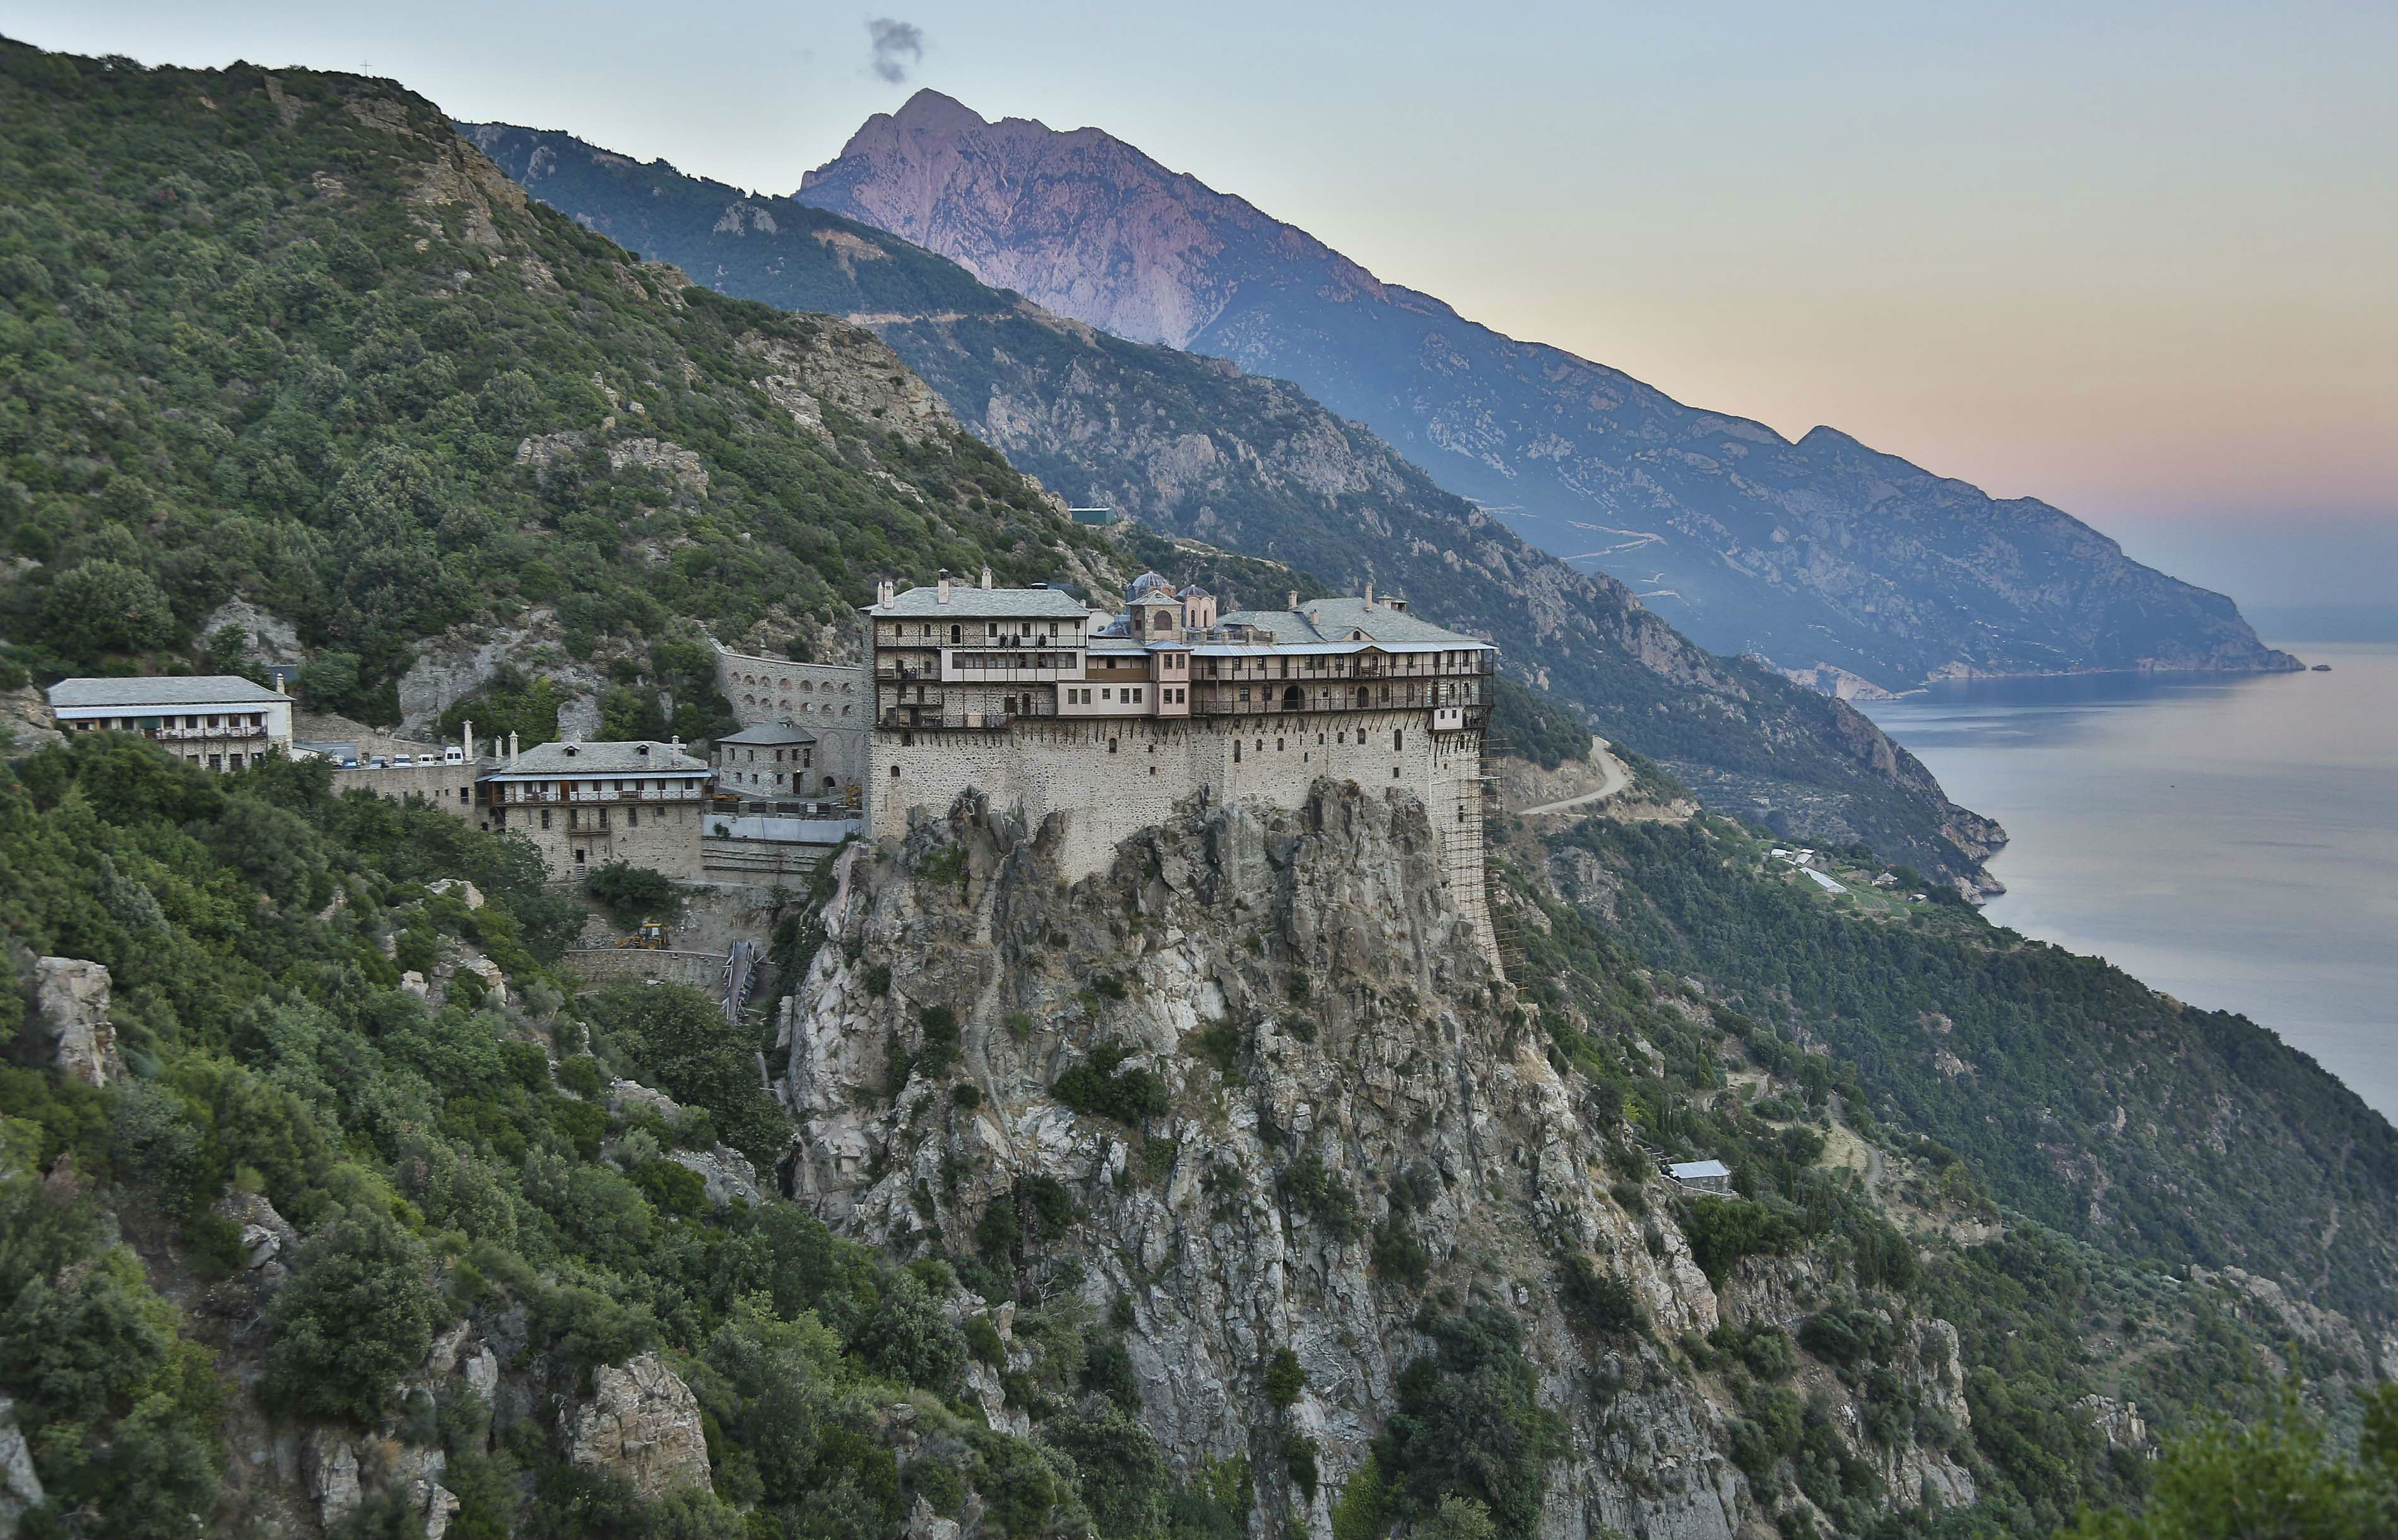 Mt Athos The Spiritual Heart Of Greece